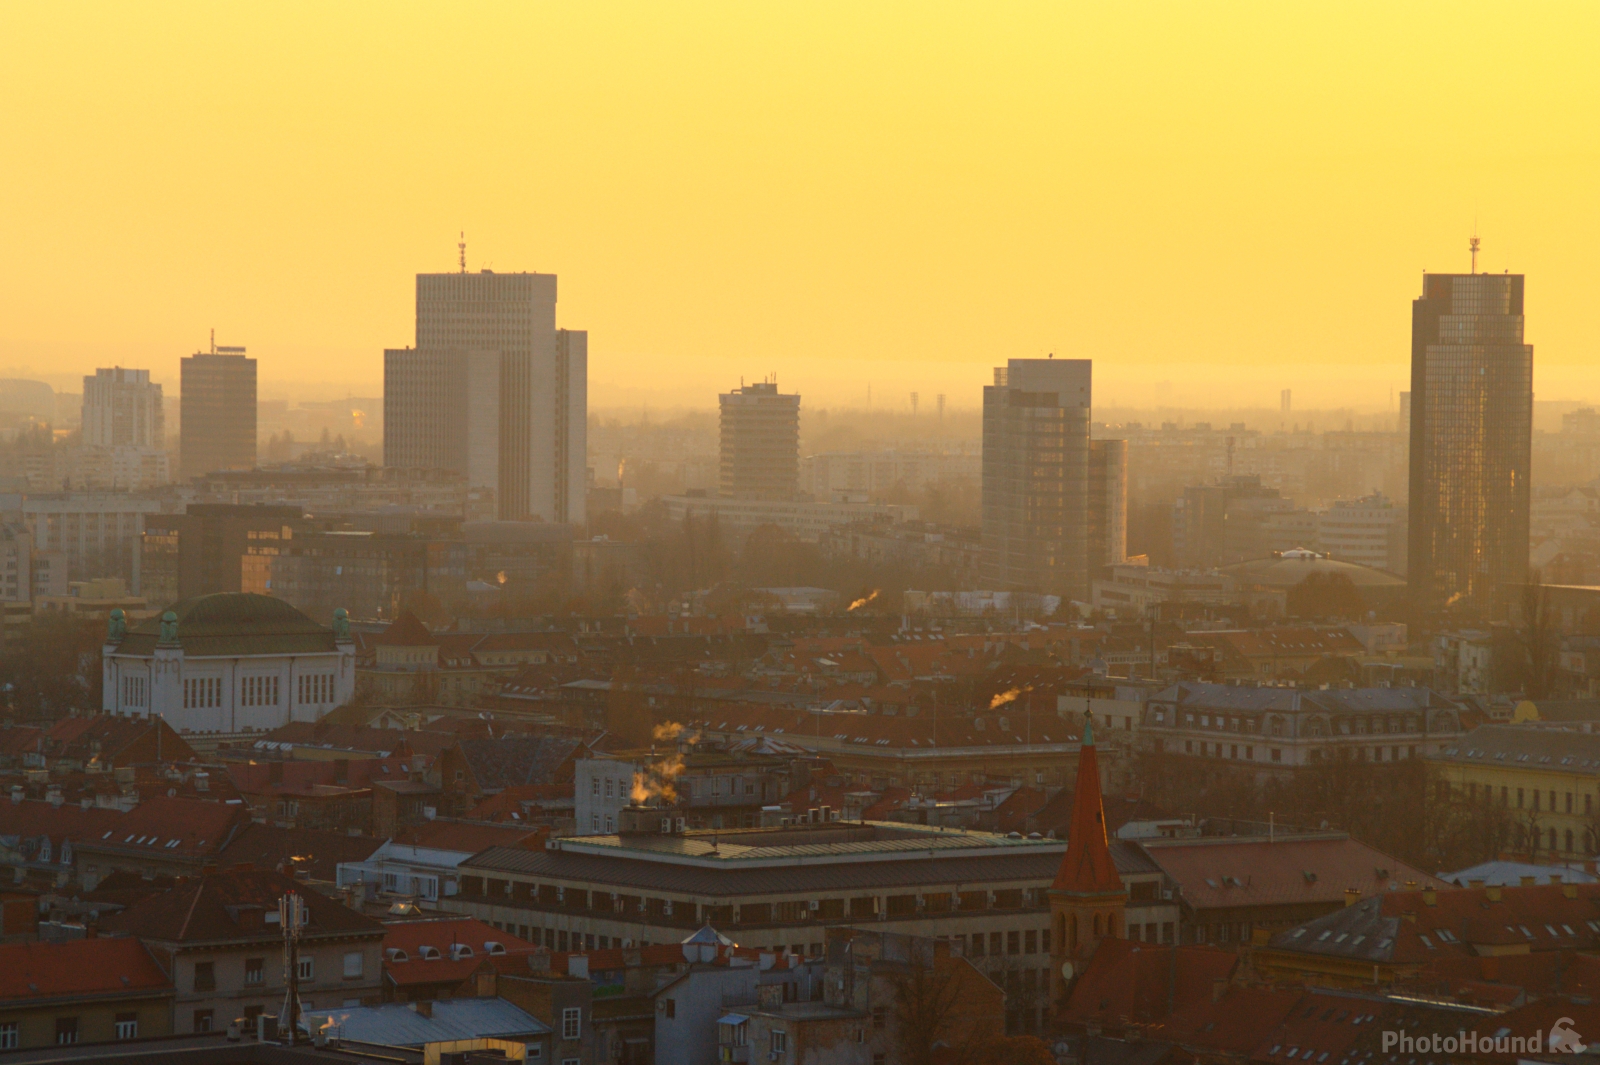 Image of Zagreb 360 observation deck by Andreja Tominac